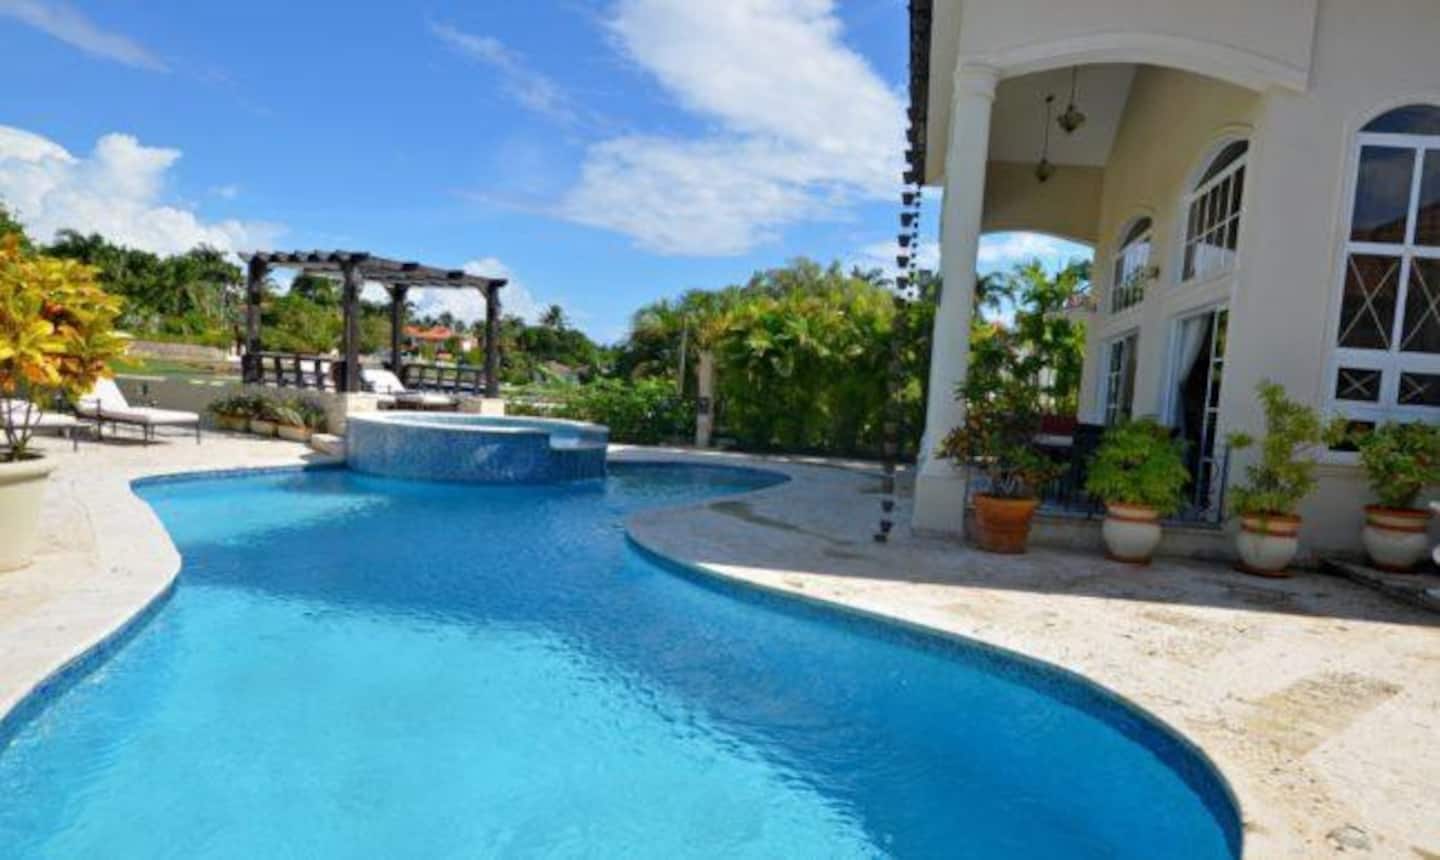 VIP vacation rentals in Cabarette, Dominican Republic